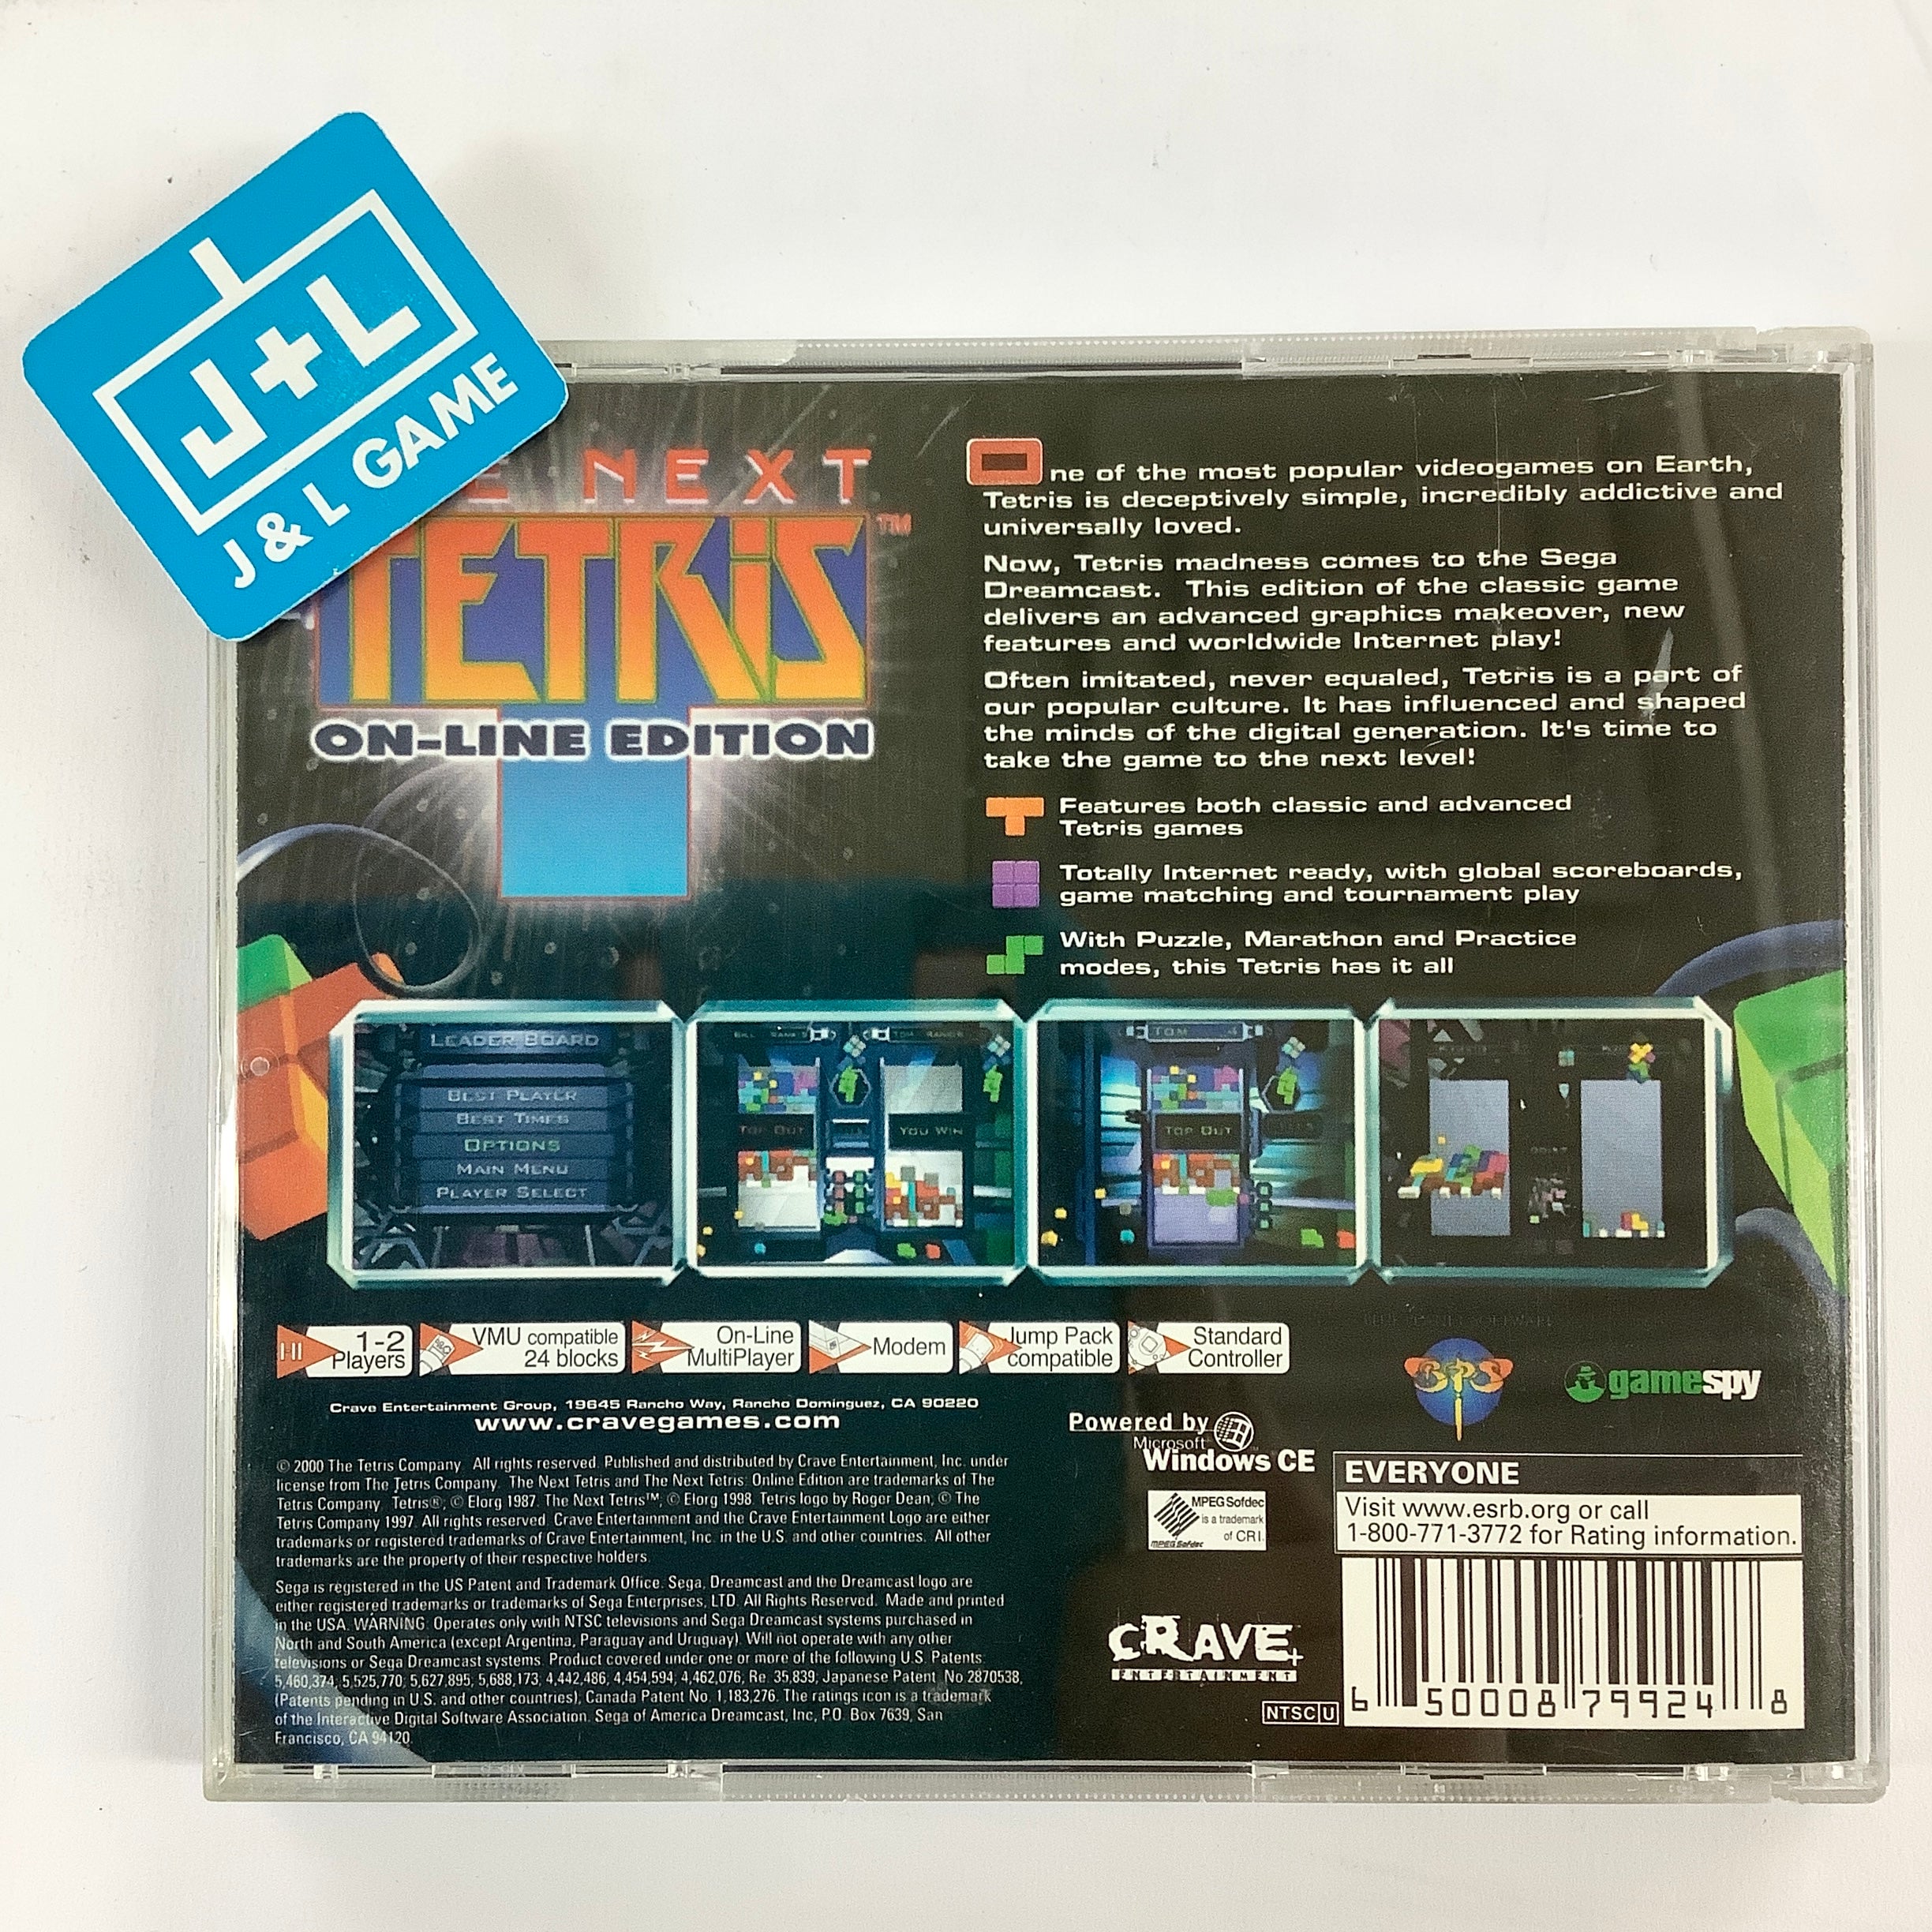 The Next Tetris: On-line Edition - (DC) SEGA Dreamcast [Pre-Owned] Video Games Crave   